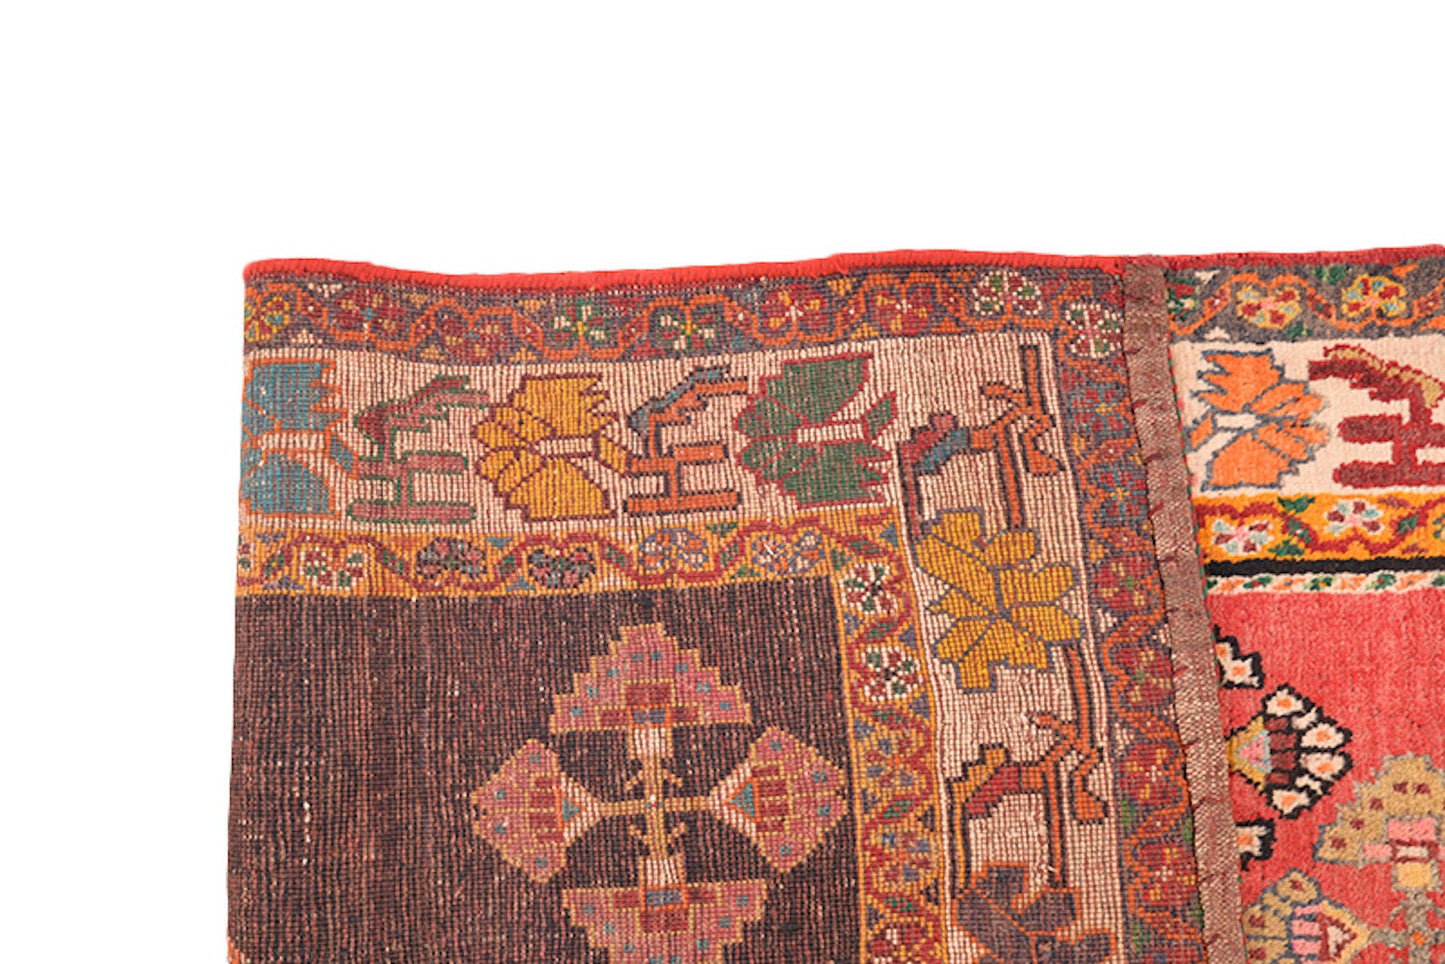 Vintage Tribal Rug | 5x7 Rug | Coral Medallion Black Background | Persian Caucasian Rug | Wool Soft Pile Rug